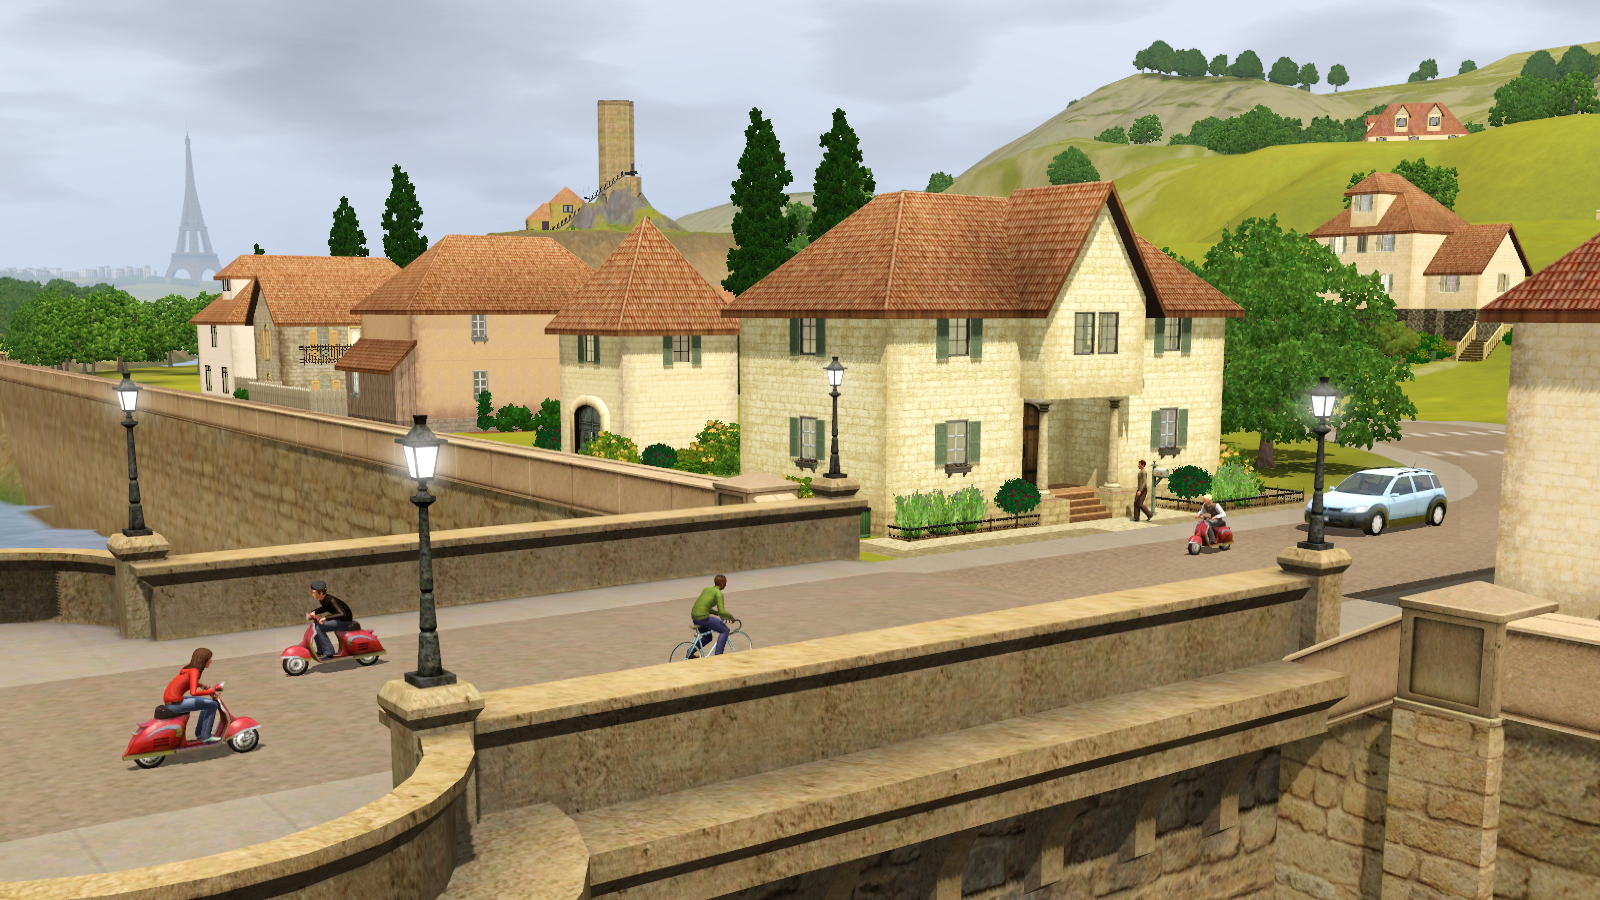 Sims 3 worlds. SIMS 3 World Adventures миротворий. Симс 3 приключения рыночная площадь. SIMS 3 + SIMS мир приключений торрент. SIMS 3 время приключений.